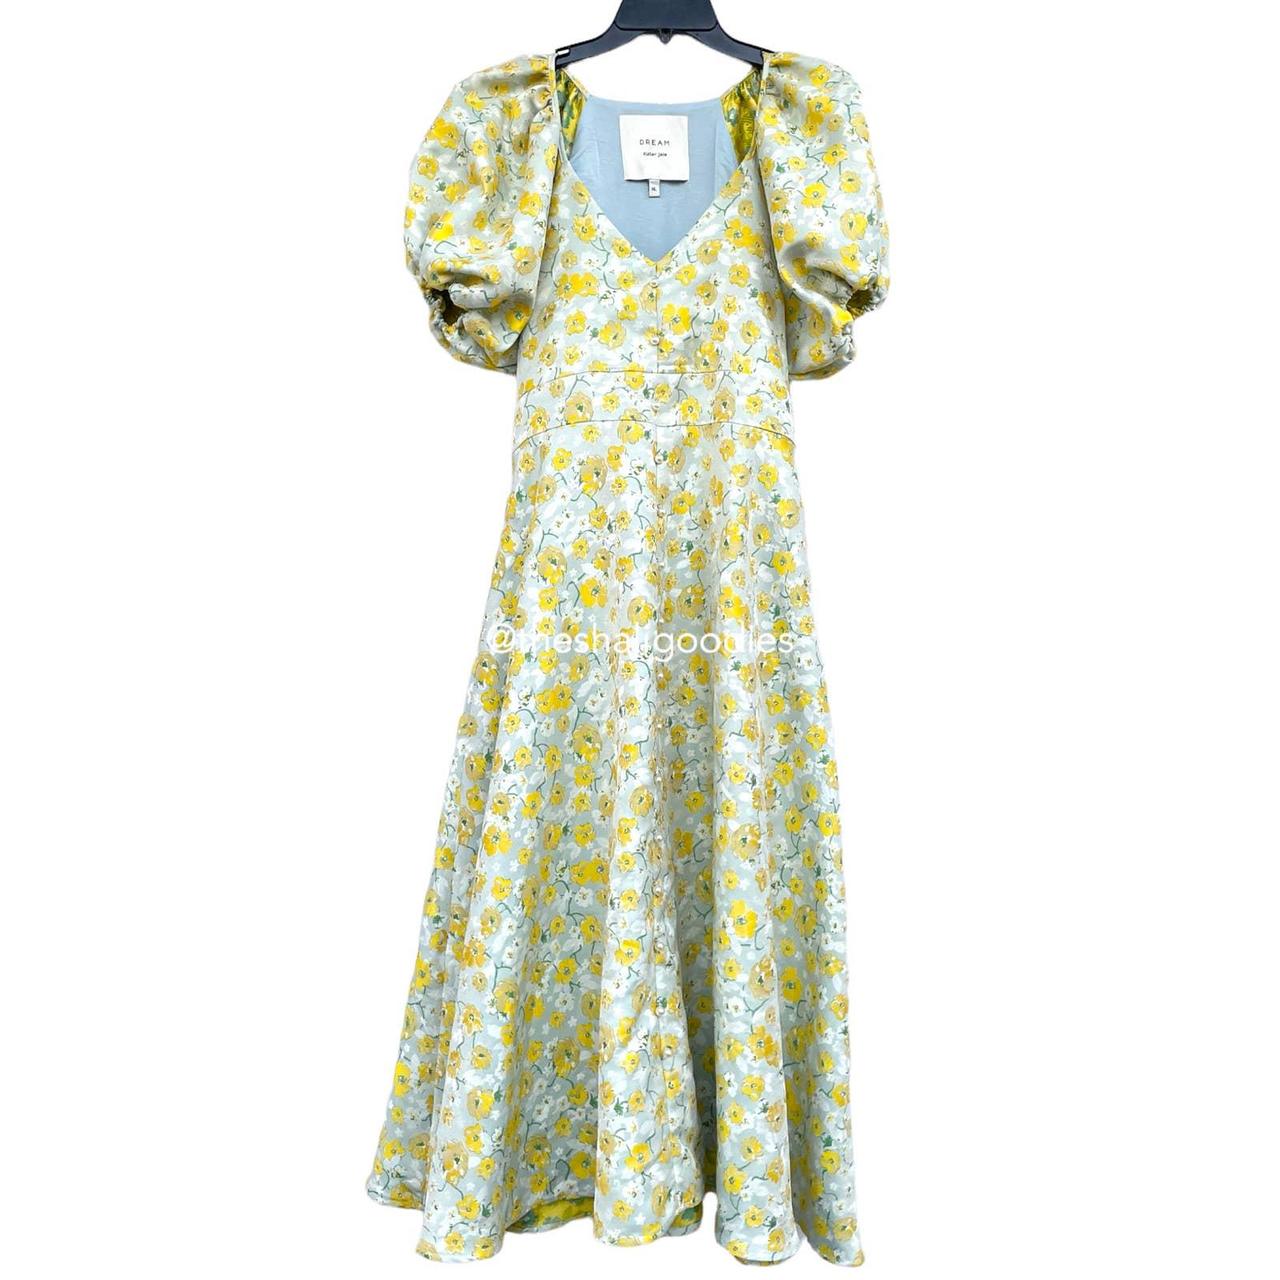 Product Image 1 - DREAM SISTER JANE Dress

**Actual color